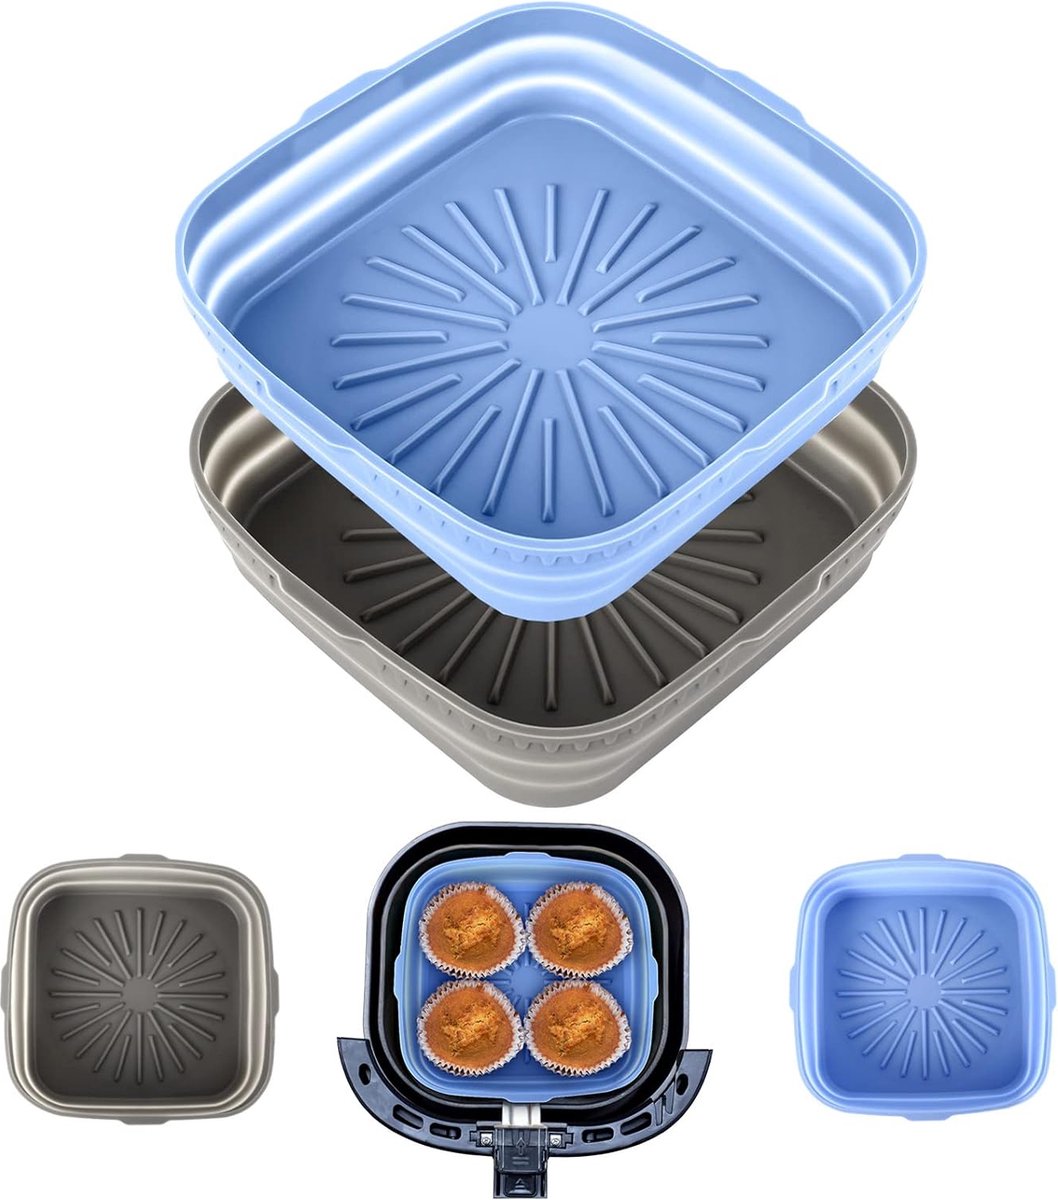 2 stuks Air Fryer siliconen pot, opvouwbare siliconen vorm, heteluchtfriteuse, anti-aanbaklaag, siliconen bakplaat, airfryer, siliconen vorm voor oven, cakevorm, magnetron